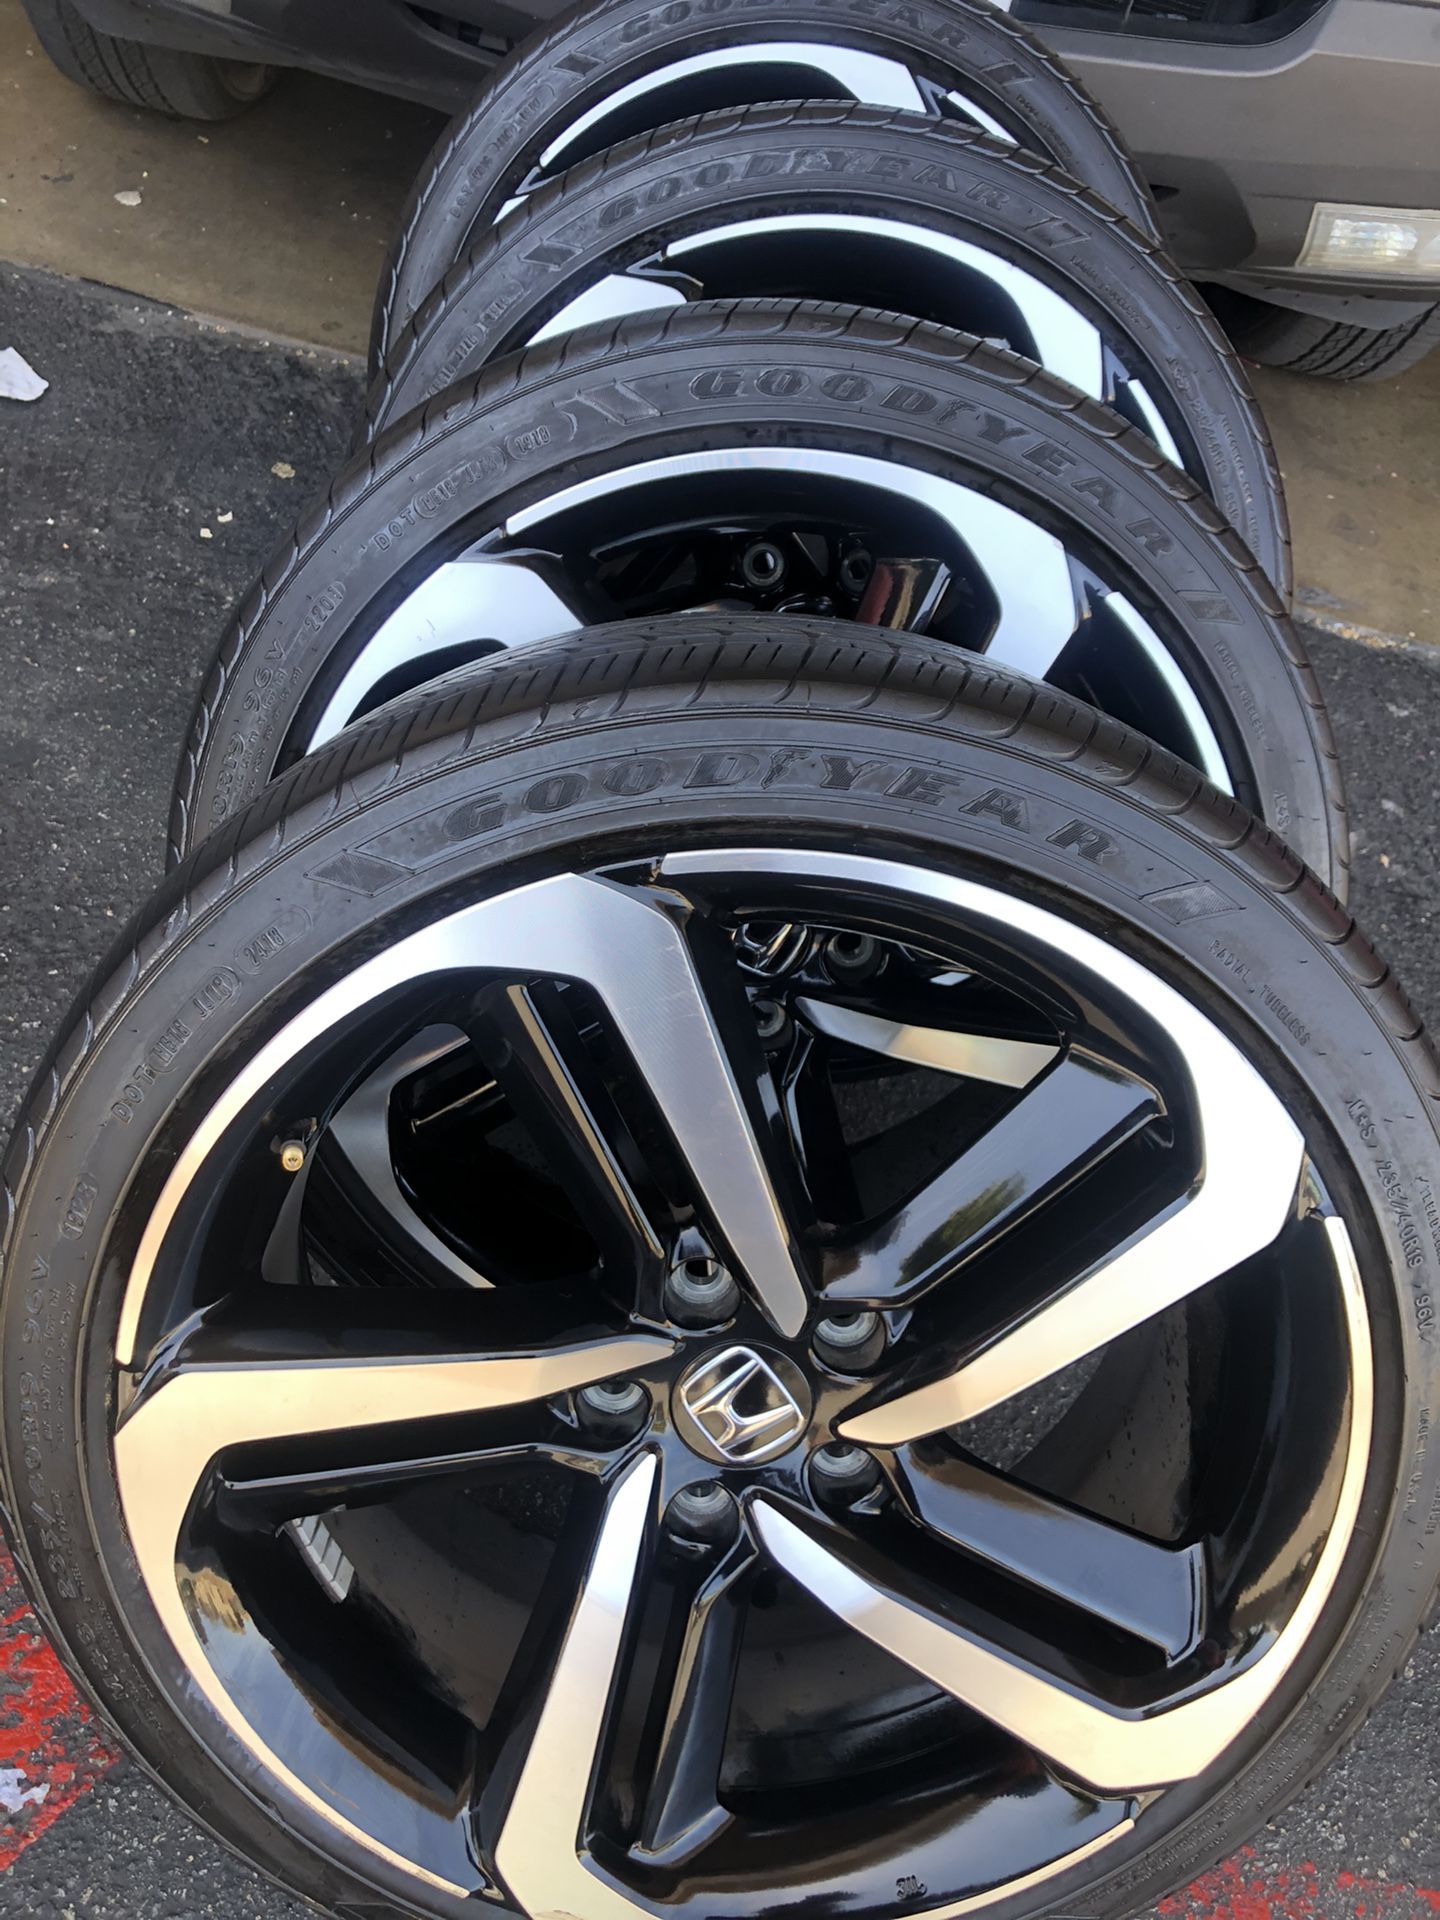 Rims tires 19x8,5 5x114.3 fit Honda Accord sport civic